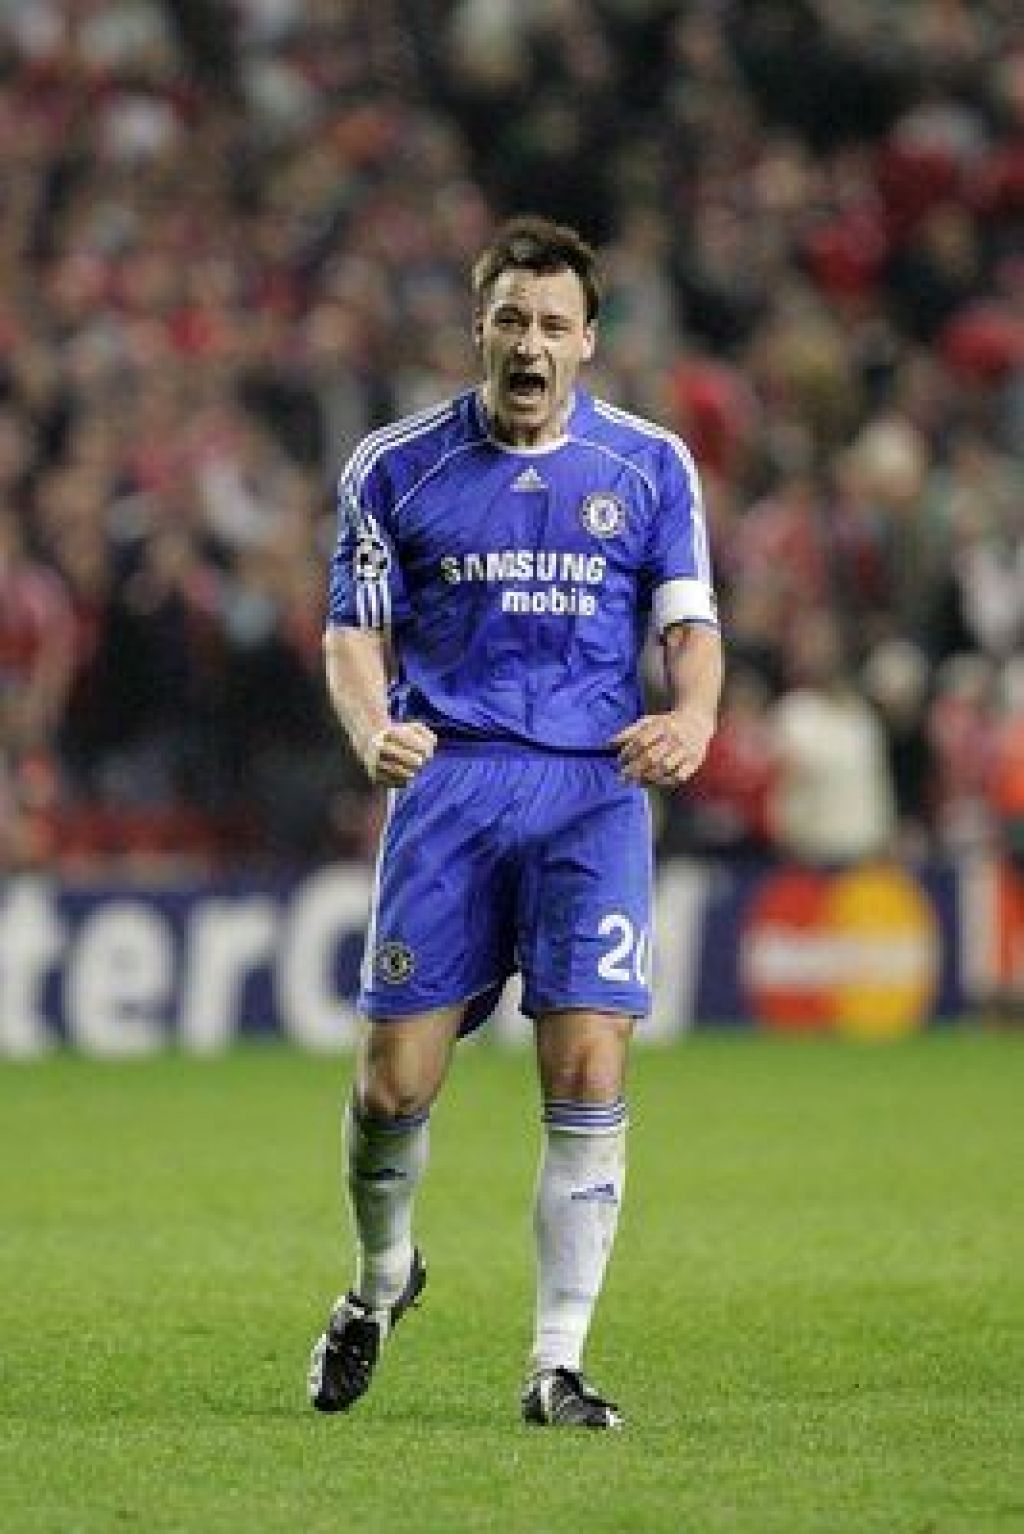 Terry pri Chelseaju še pet let